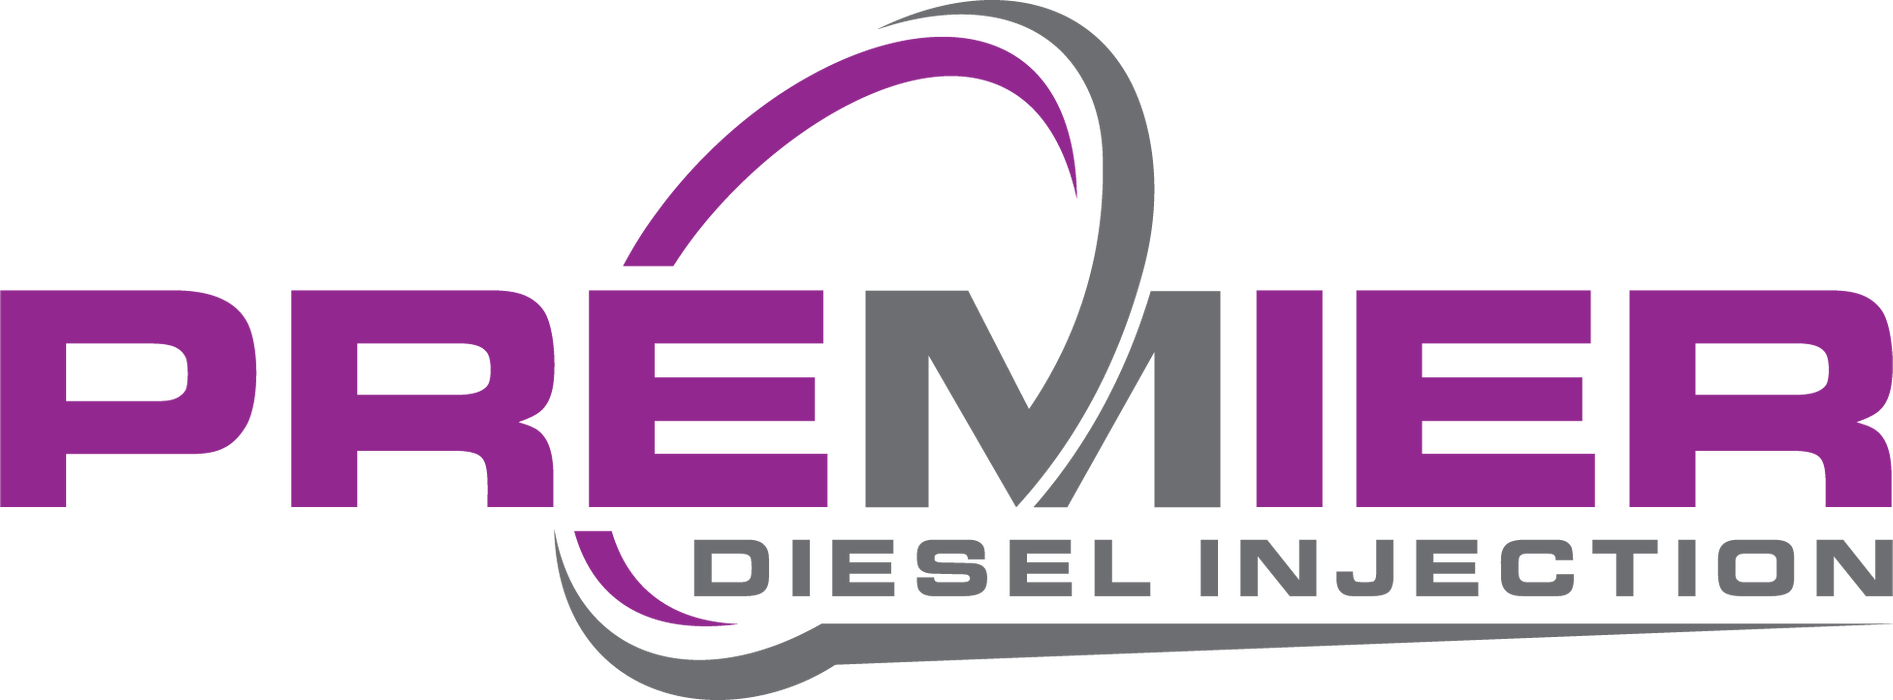 Premier Diesel Injection logo.